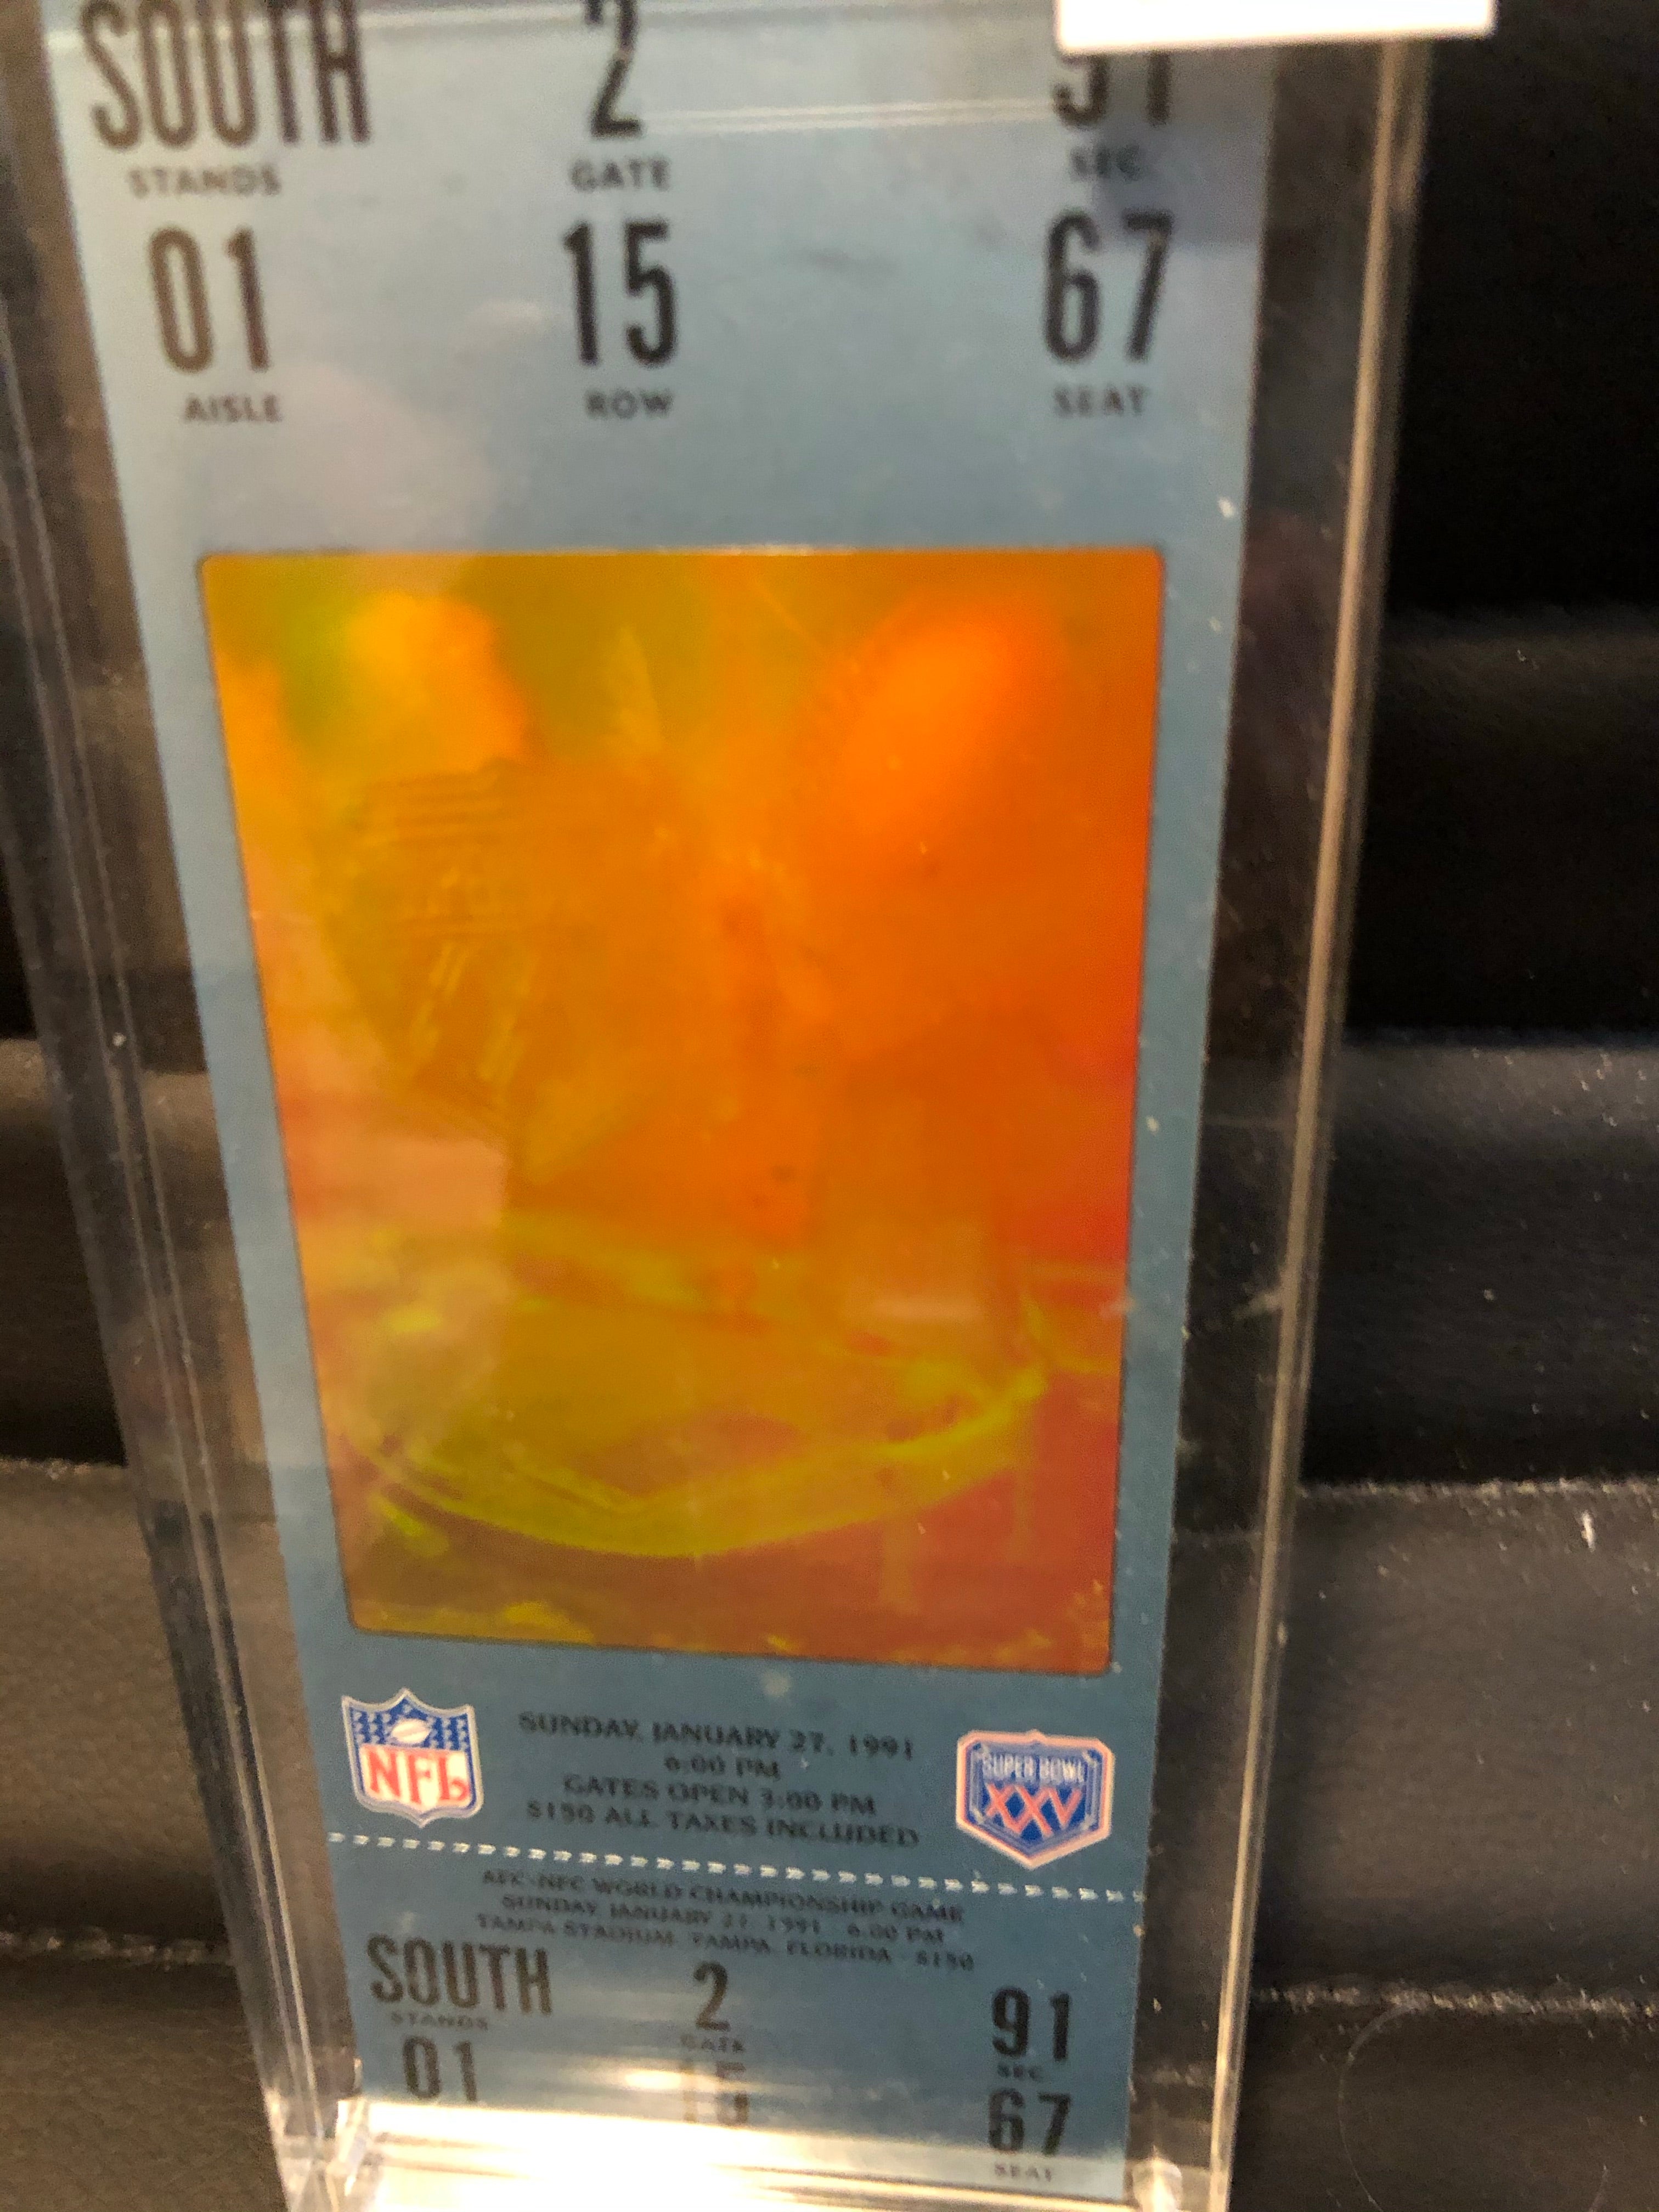 1991 Super Bowl hologram rare football game ticket in lucite holder